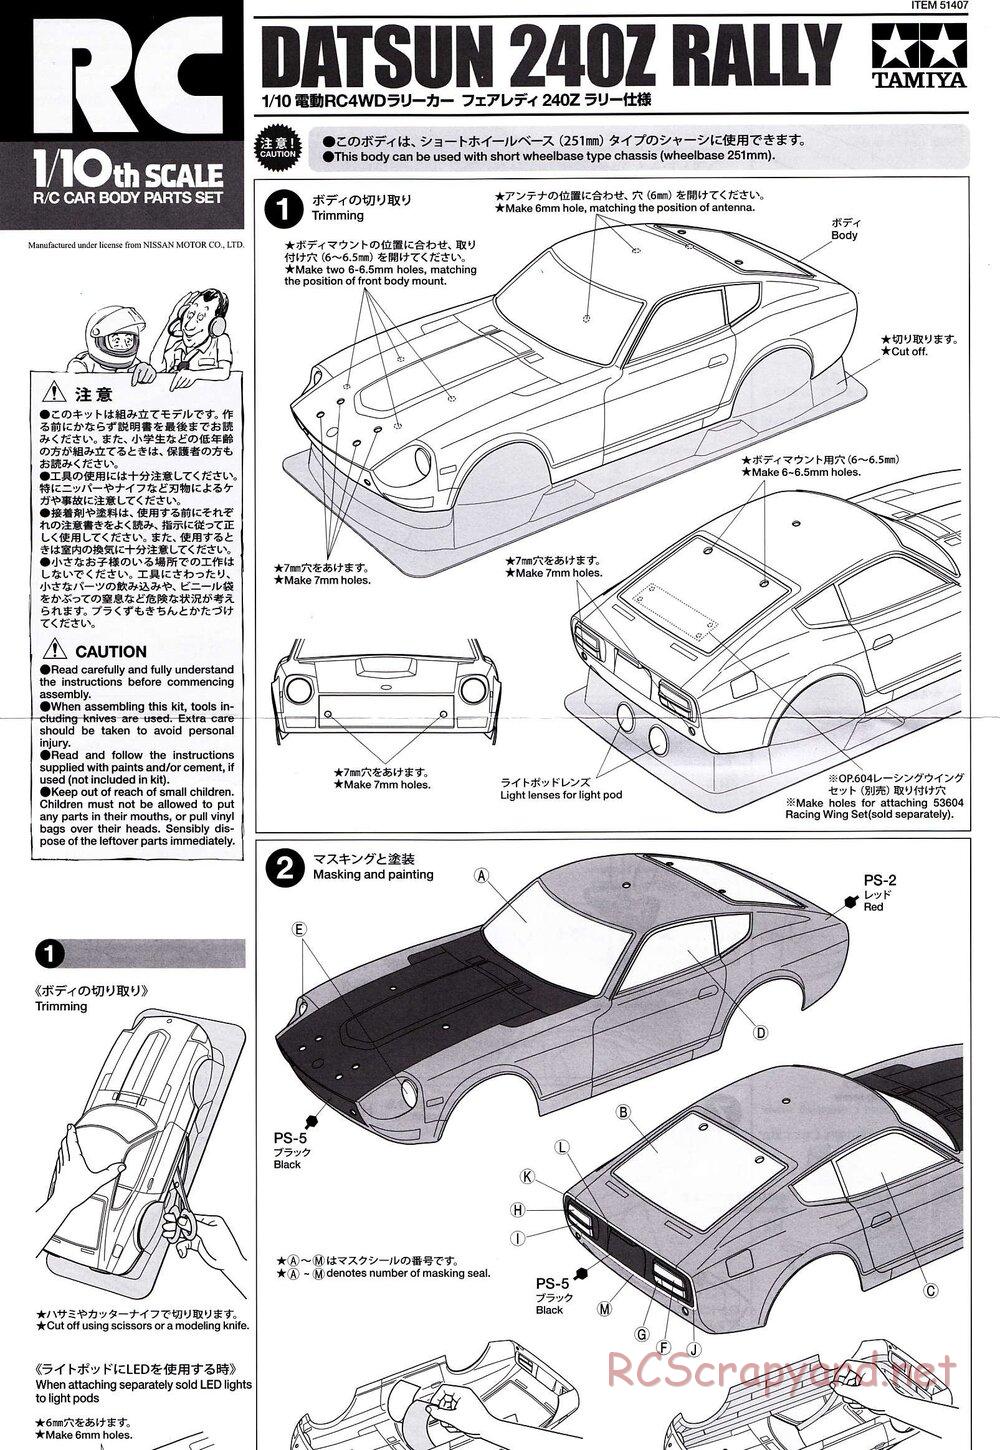 Tamiya - Datsun 240Z Rally Version - DF-03Ra Chassis - Body Manual - Page 1